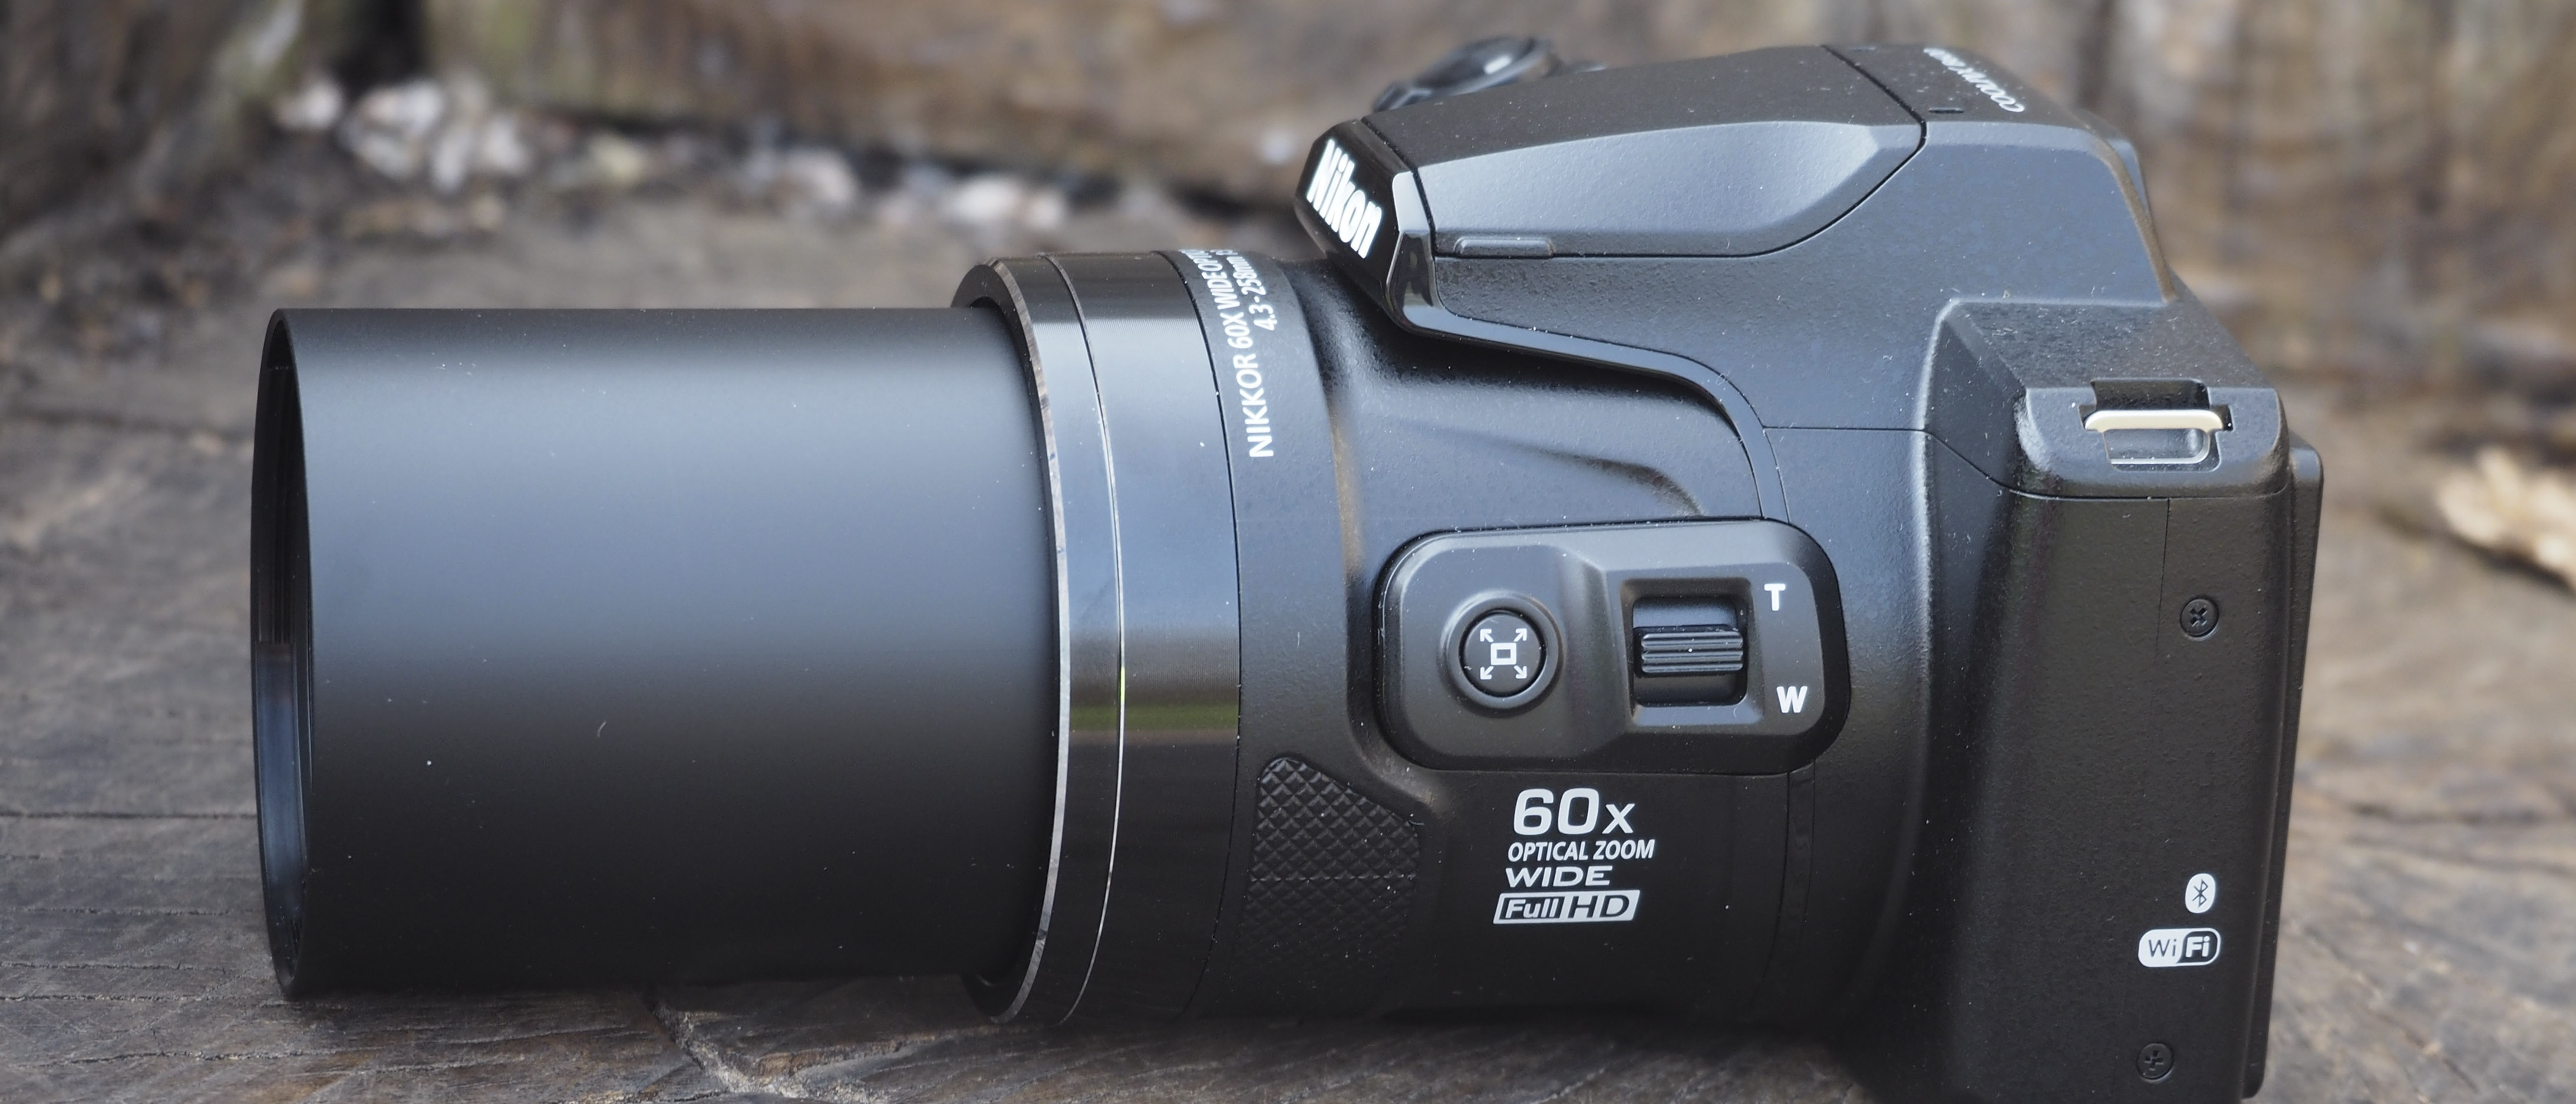 saai Vrijgekomen getuige Nikon Coolpix B600 review | Digital Camera World